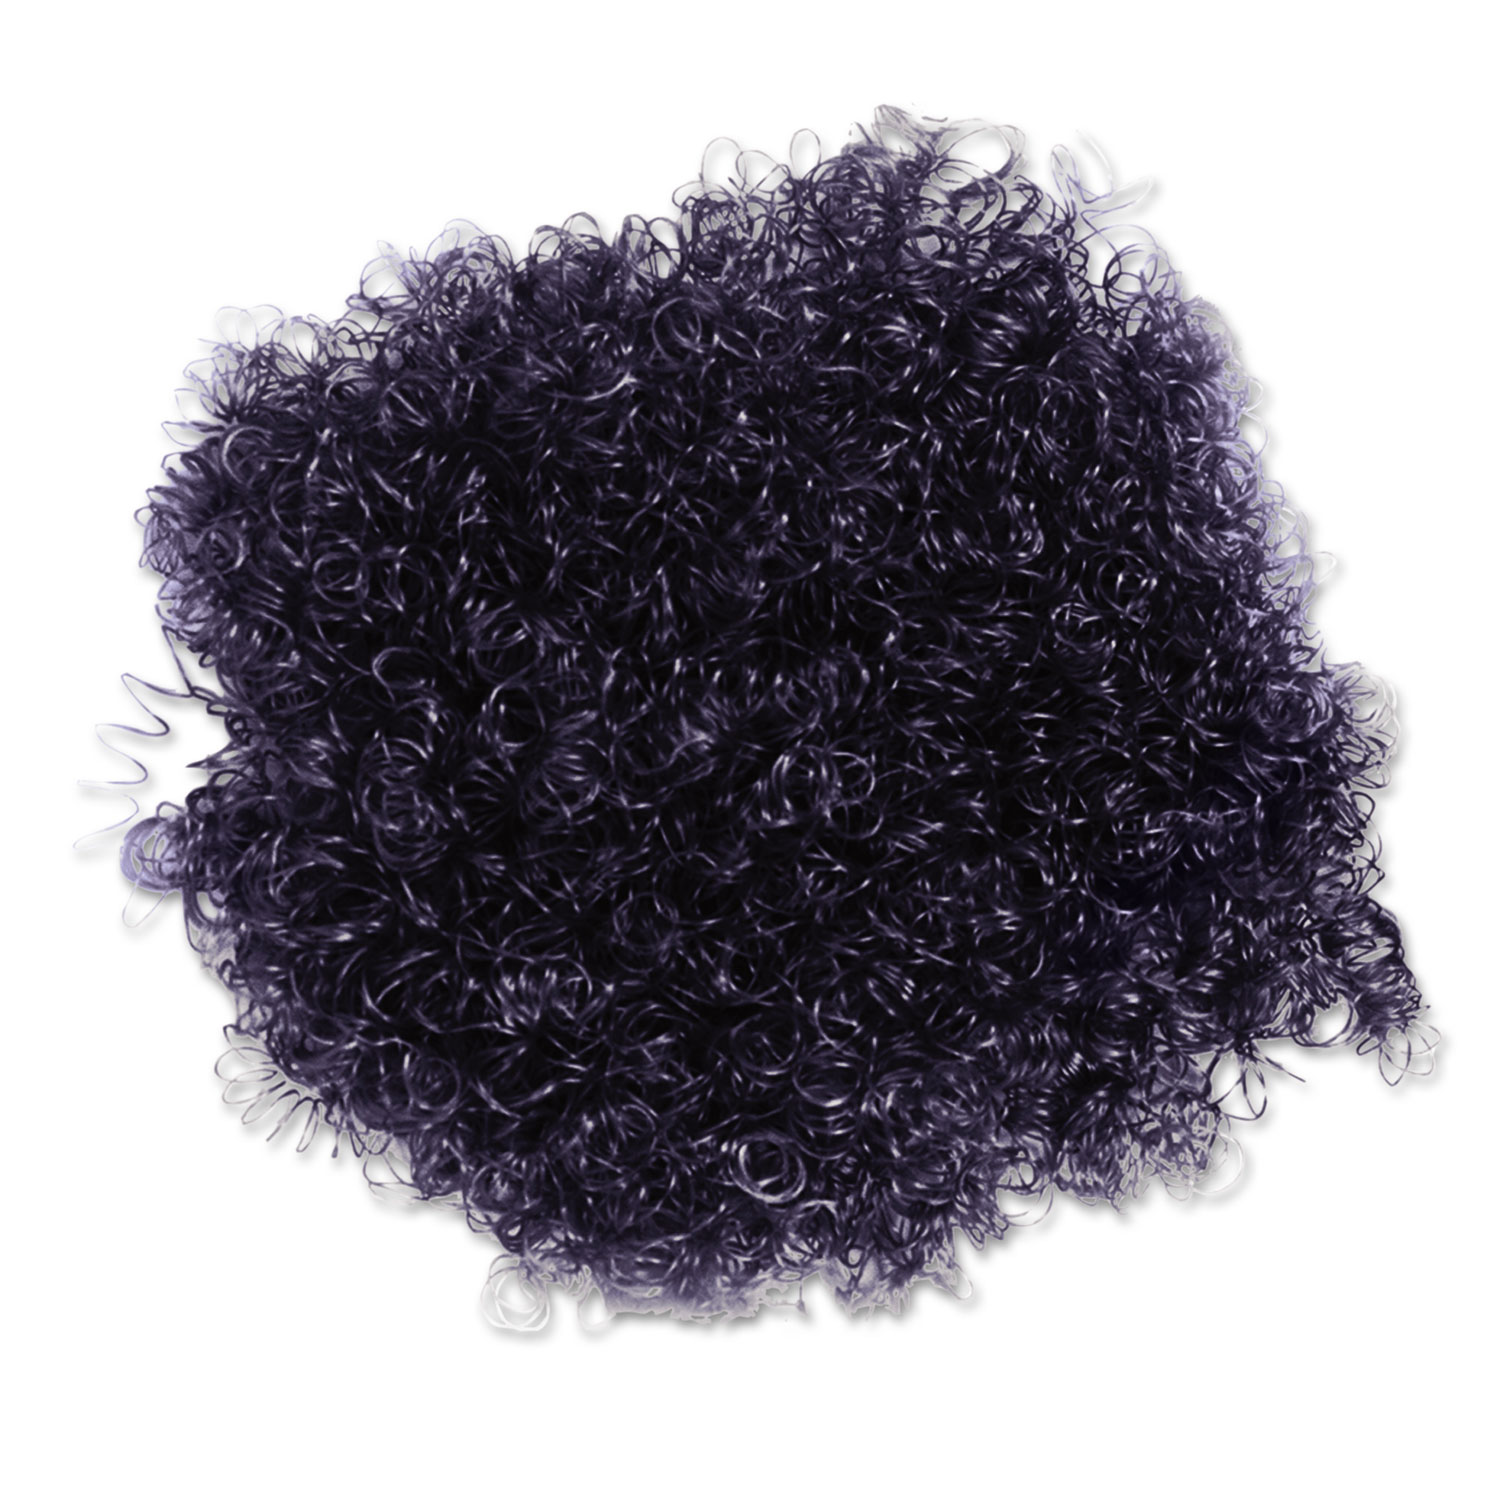 Craft Hair Kit, Black 1/2 Curls, 4 oz.